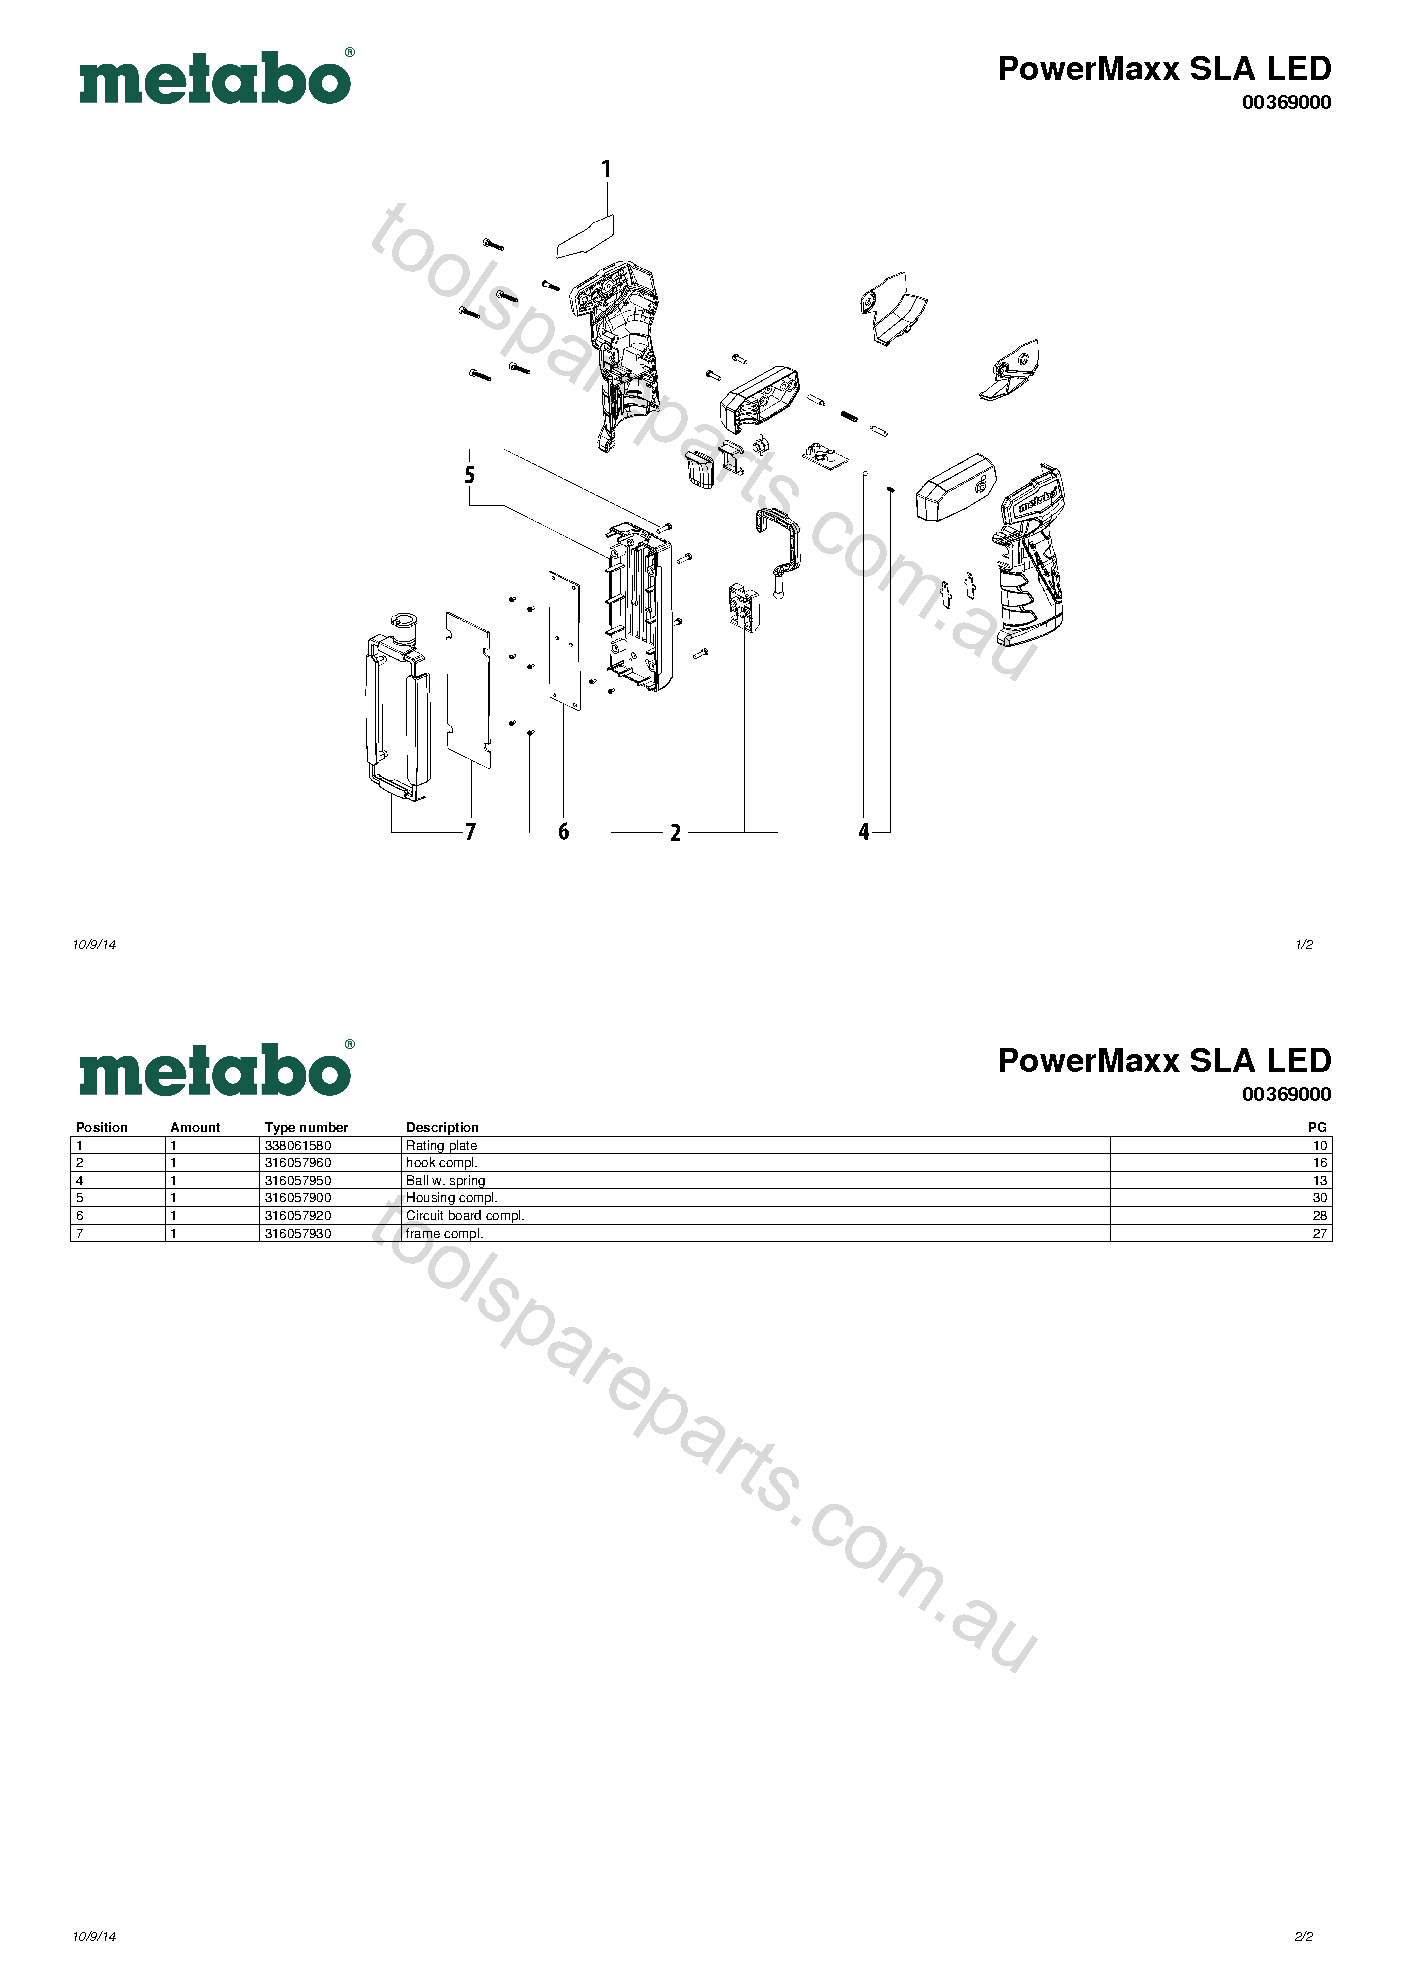 Metabo PowerMaxx SLA LED 00369000  Diagram 1